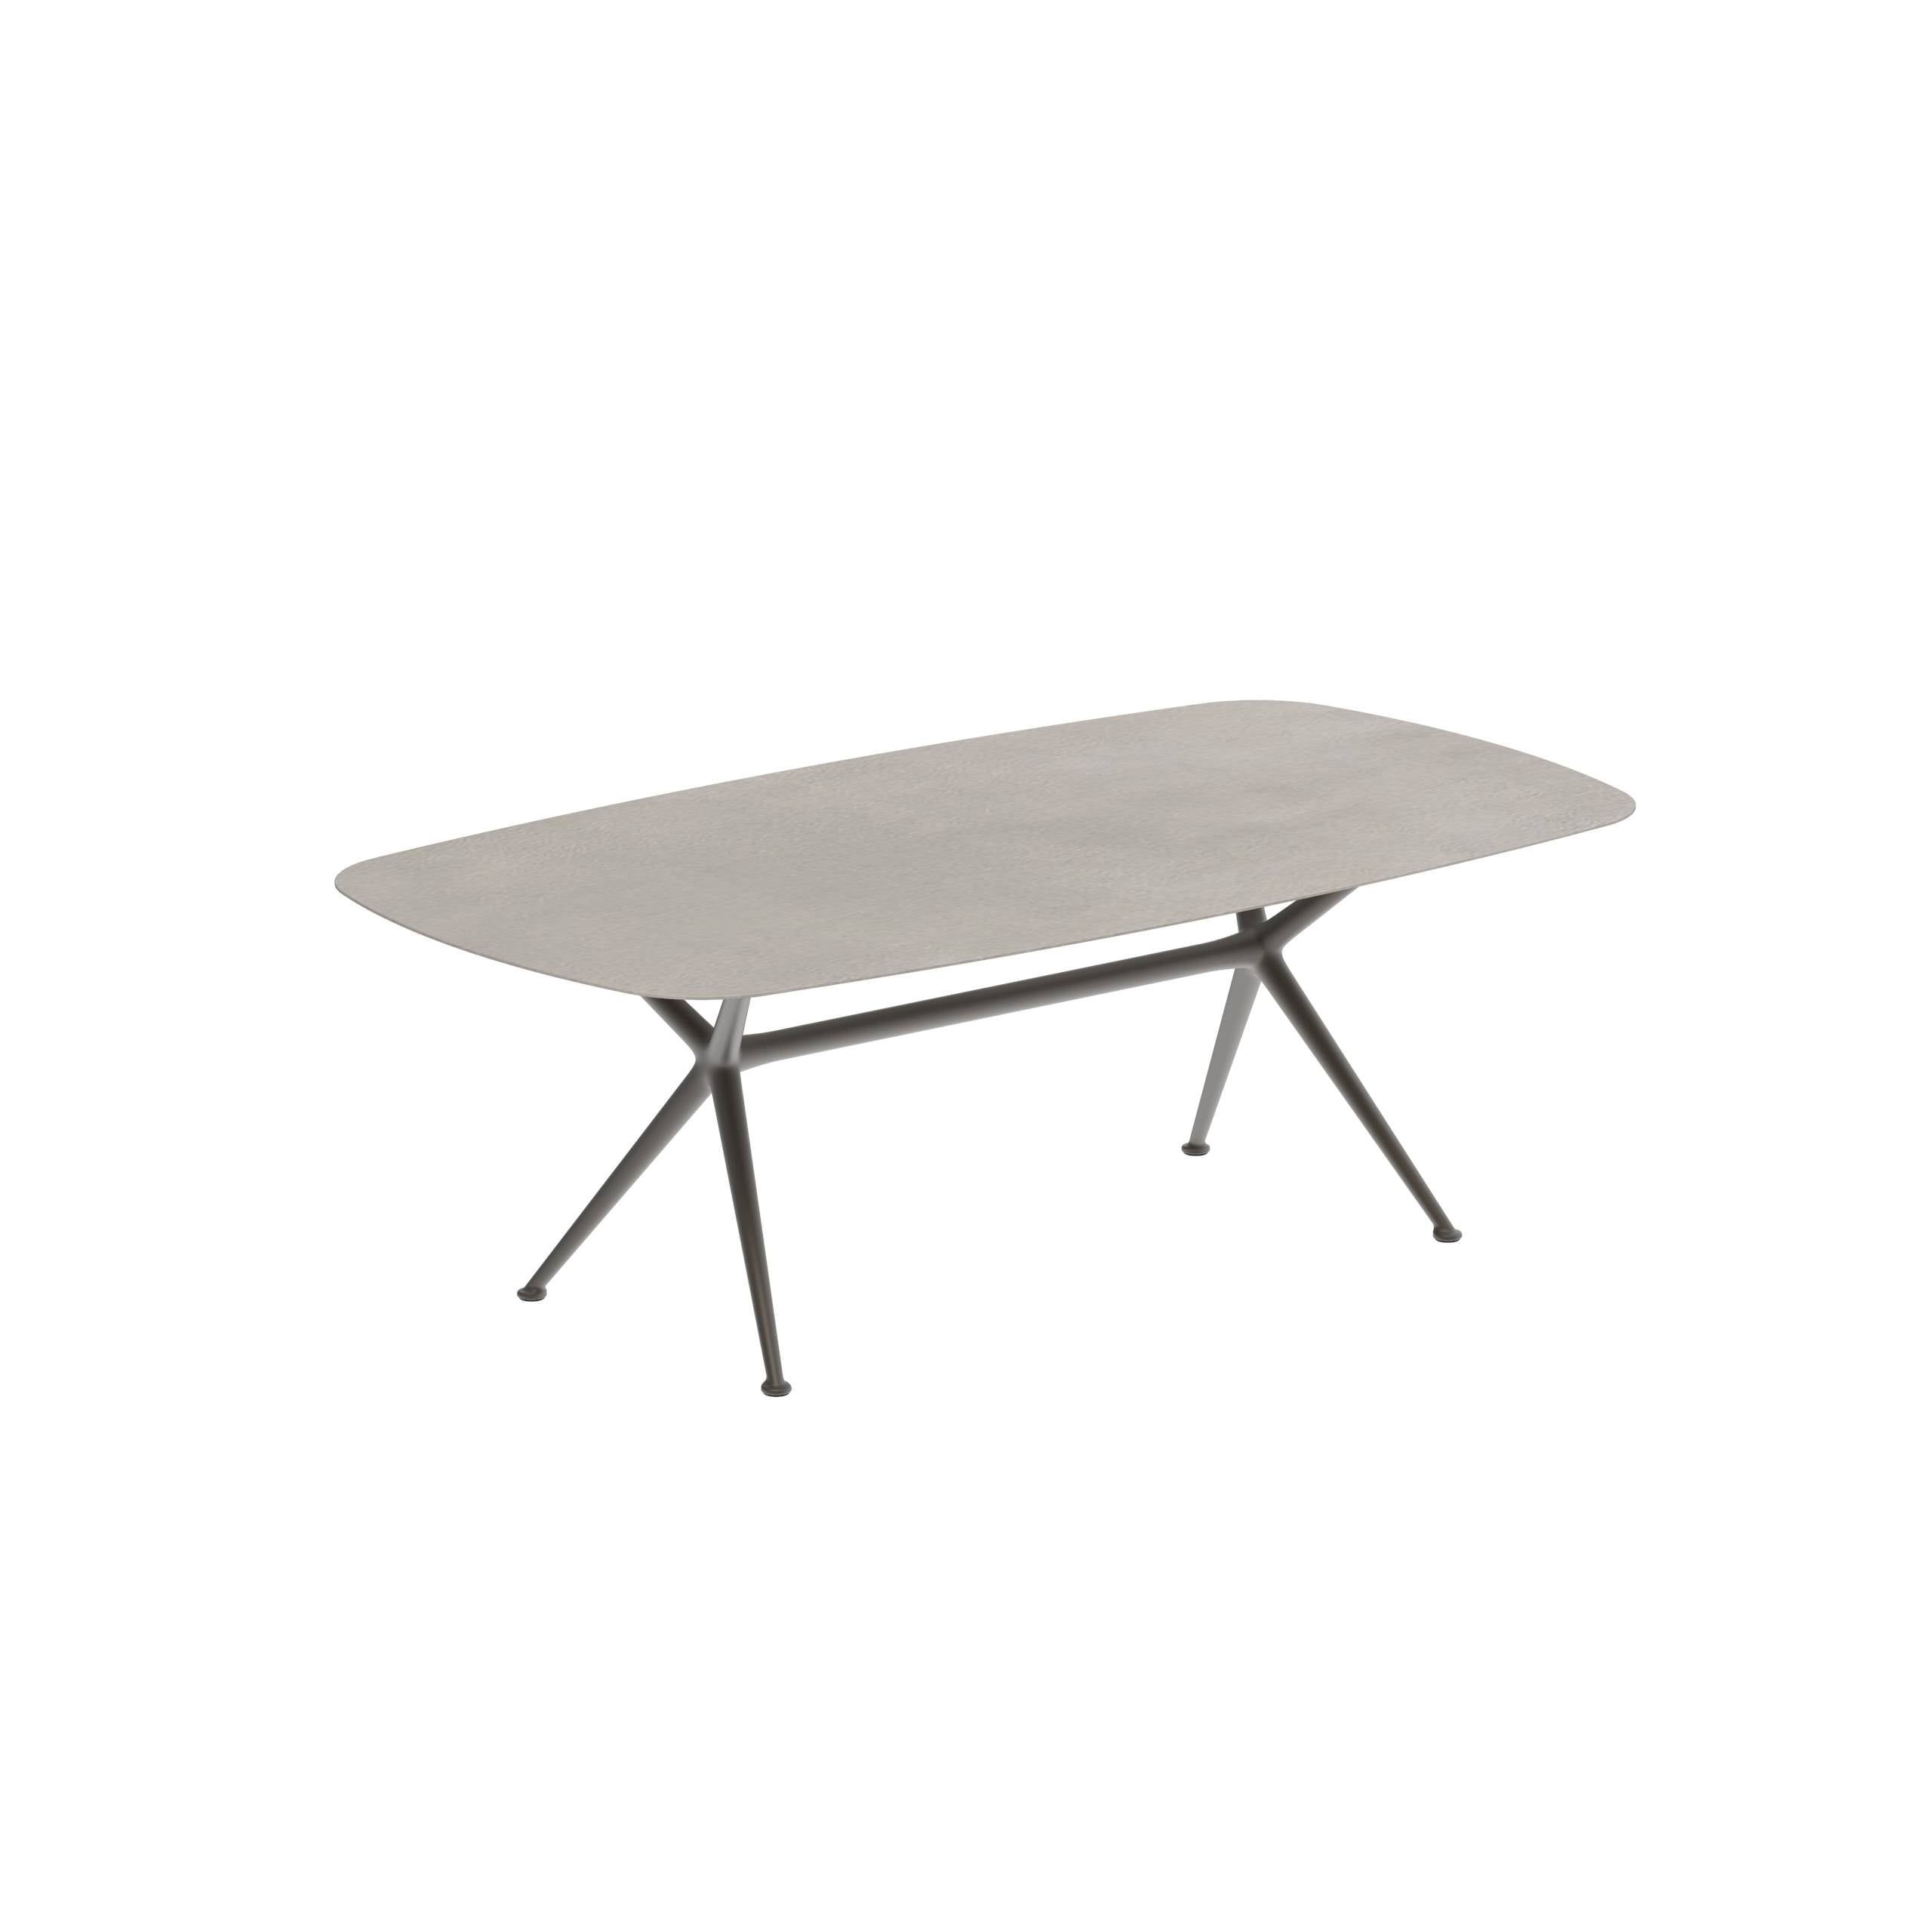 Exes Table 220x120cm Alu Legs Bronze - Table Top Ceramic Cemento Luminoso